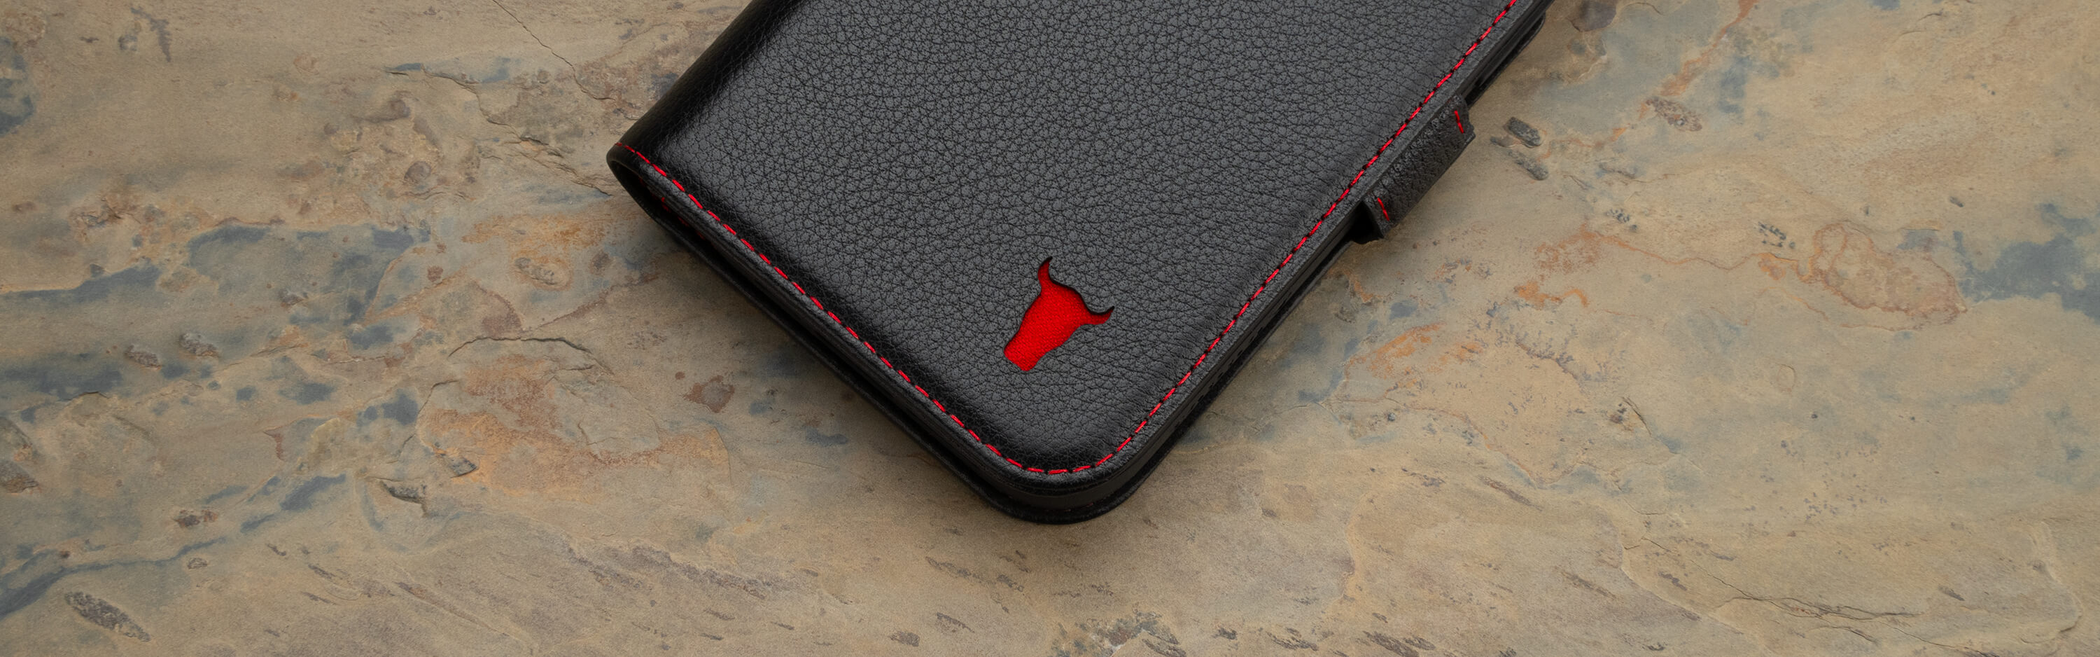 Apple iPhone 12 Pro Max Leather Cases - TORRO